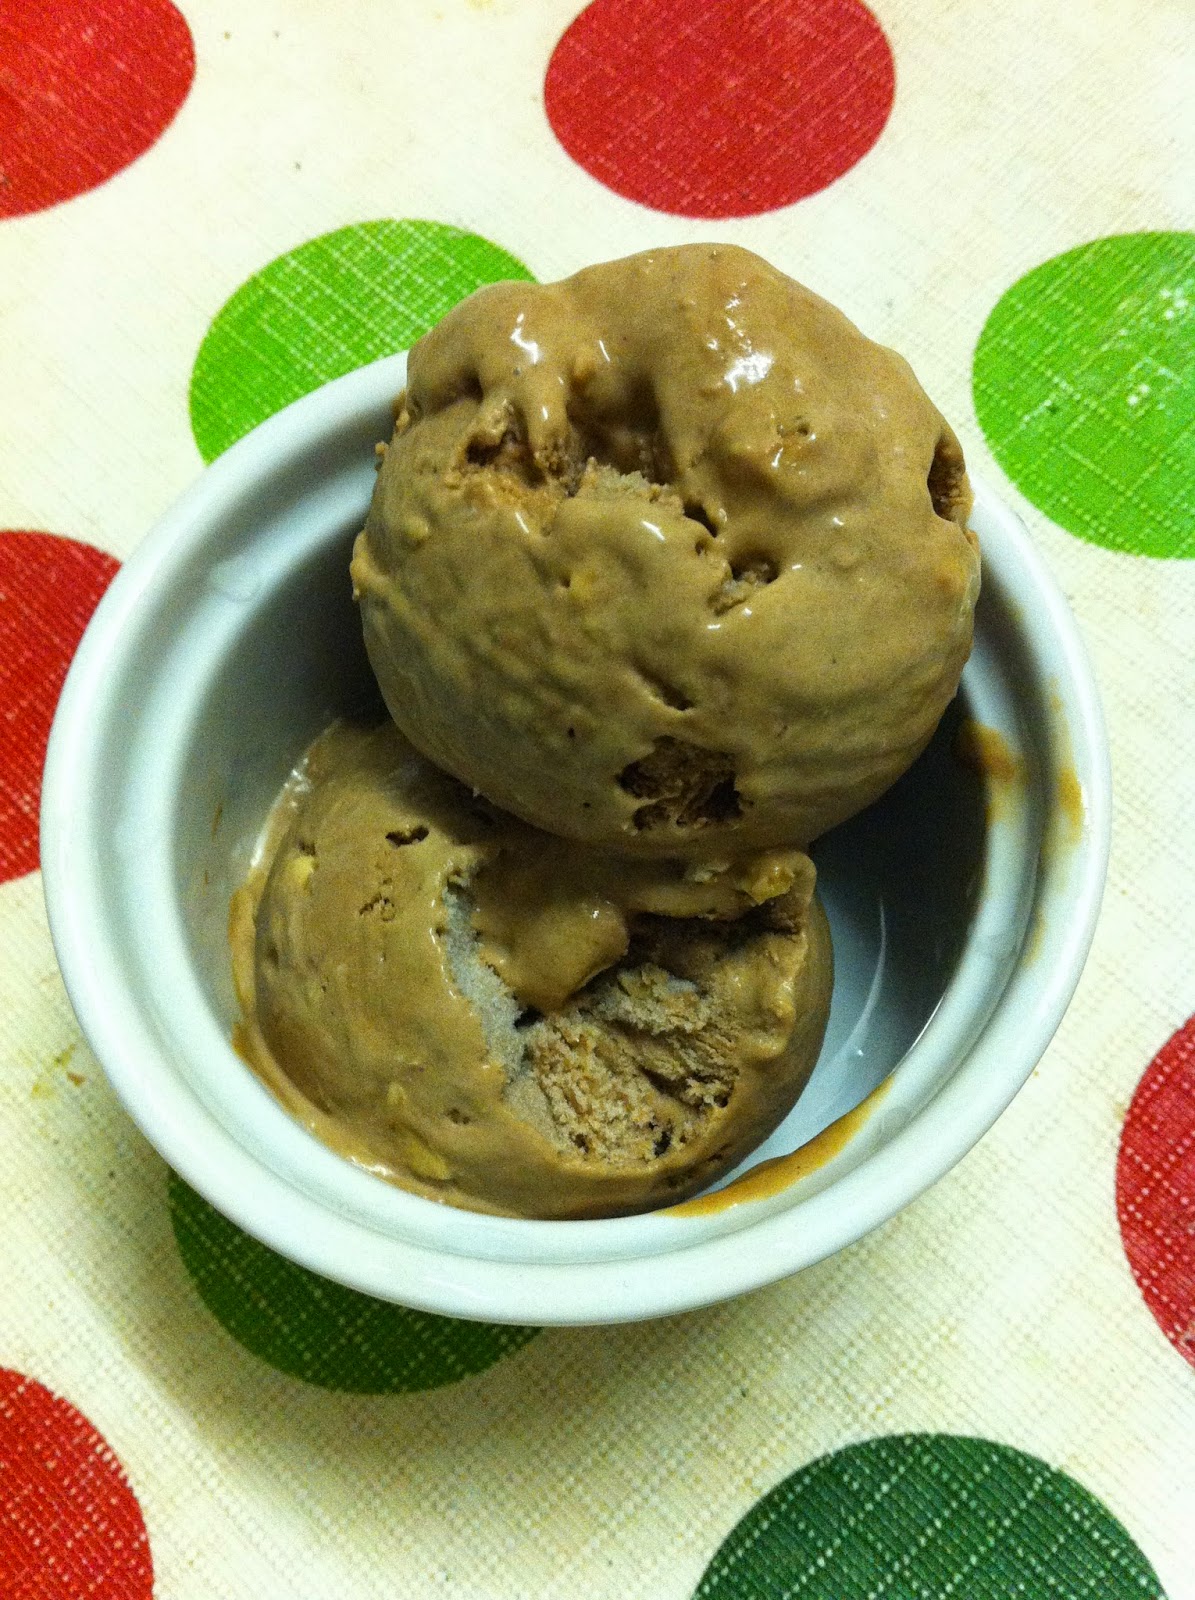 Creamy Chocolate and Hazelnut Ice Cream